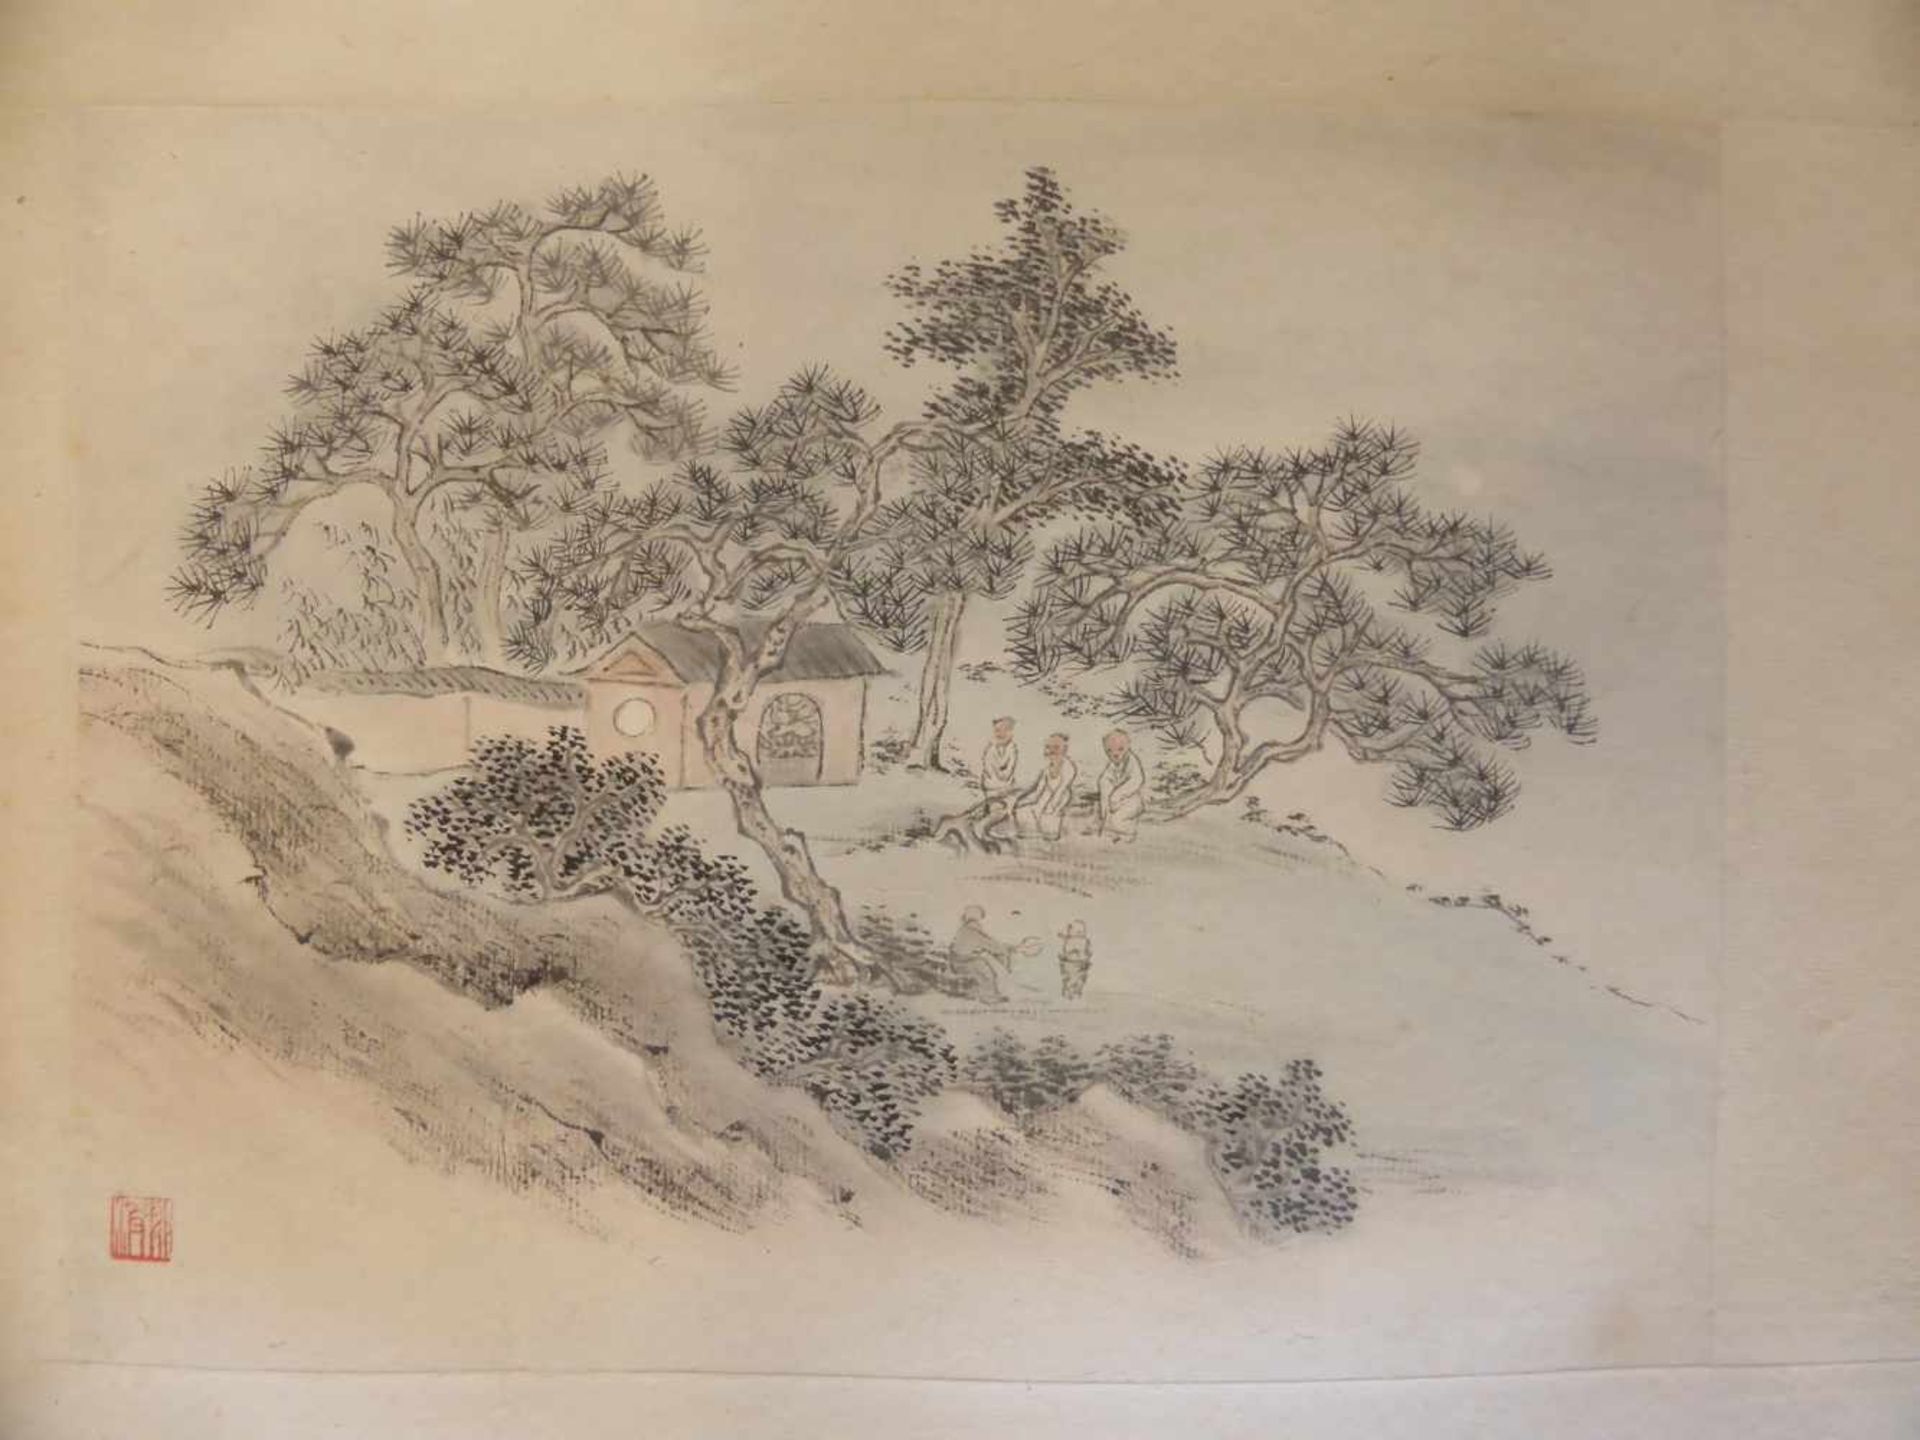 LI, YANKUI1840 - 1913. Water and mountain landscapes. China. Qing dynasty. 19th c. Leporello - Bild 3 aus 13